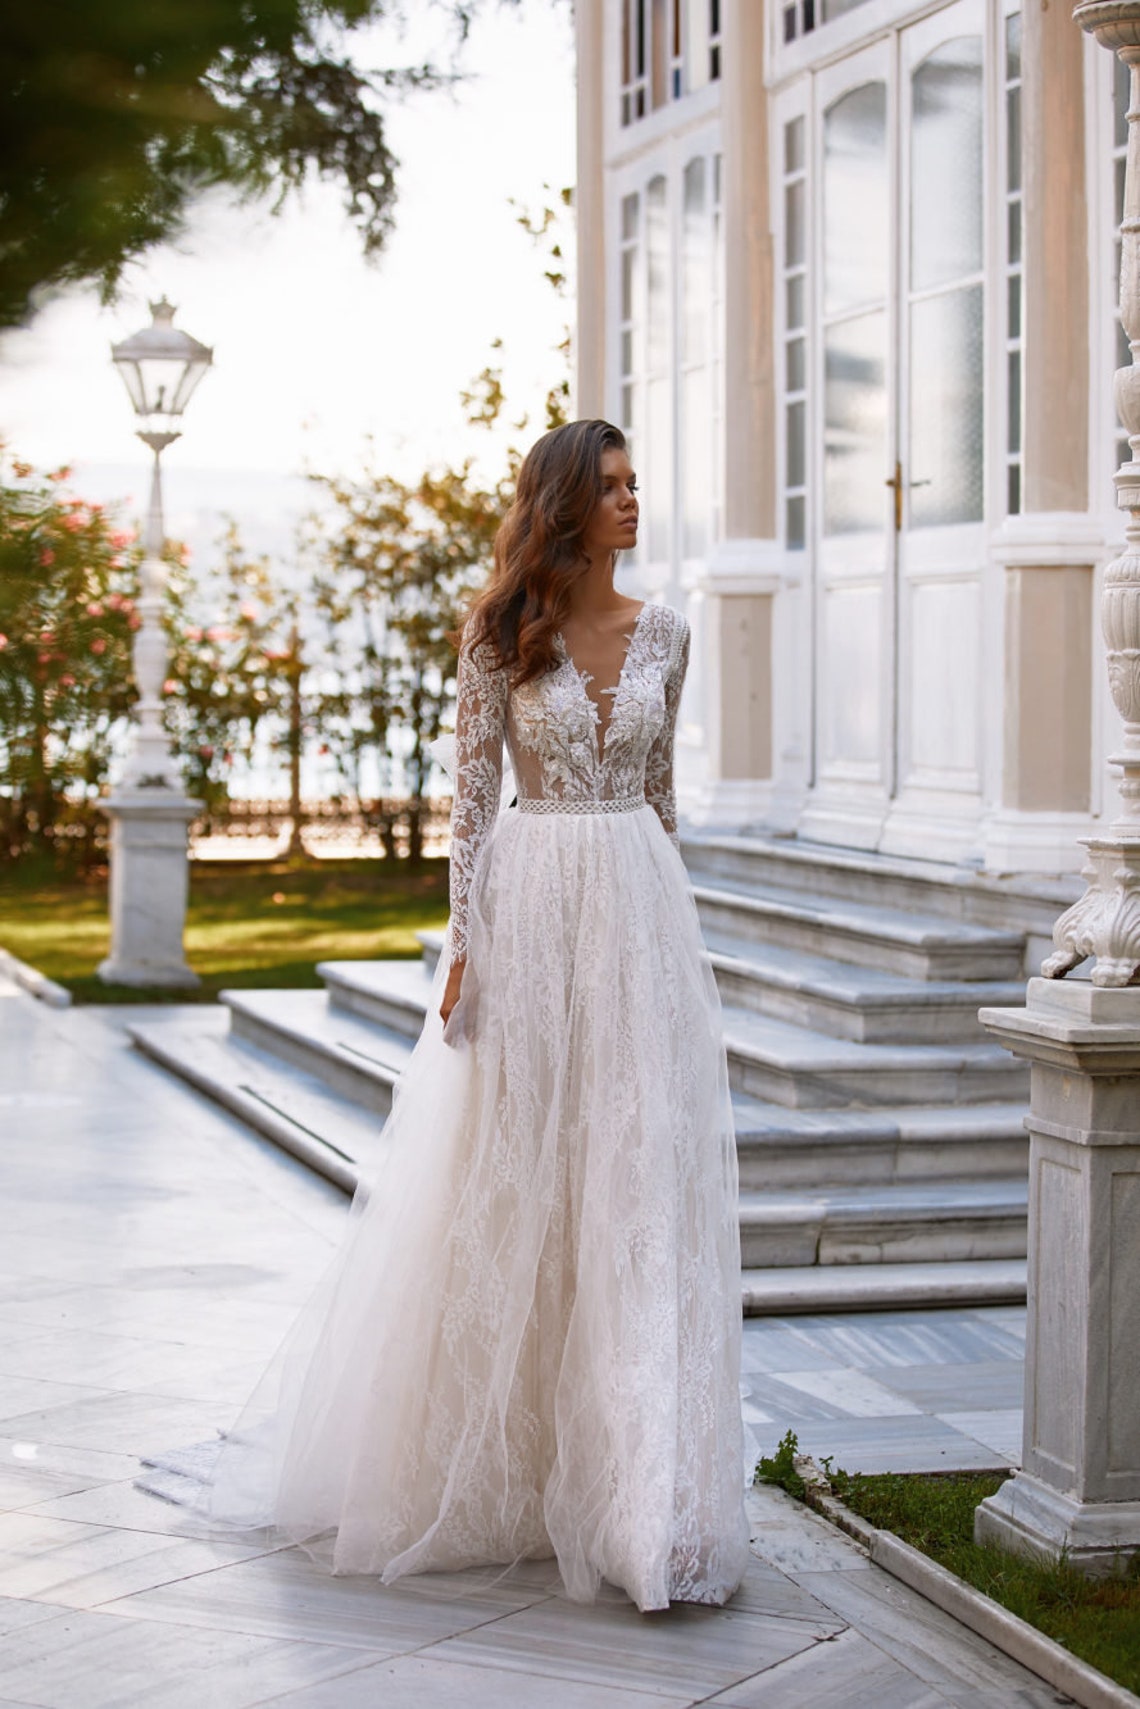 Top 20 Long Sleeve Wedding Dresses for ...